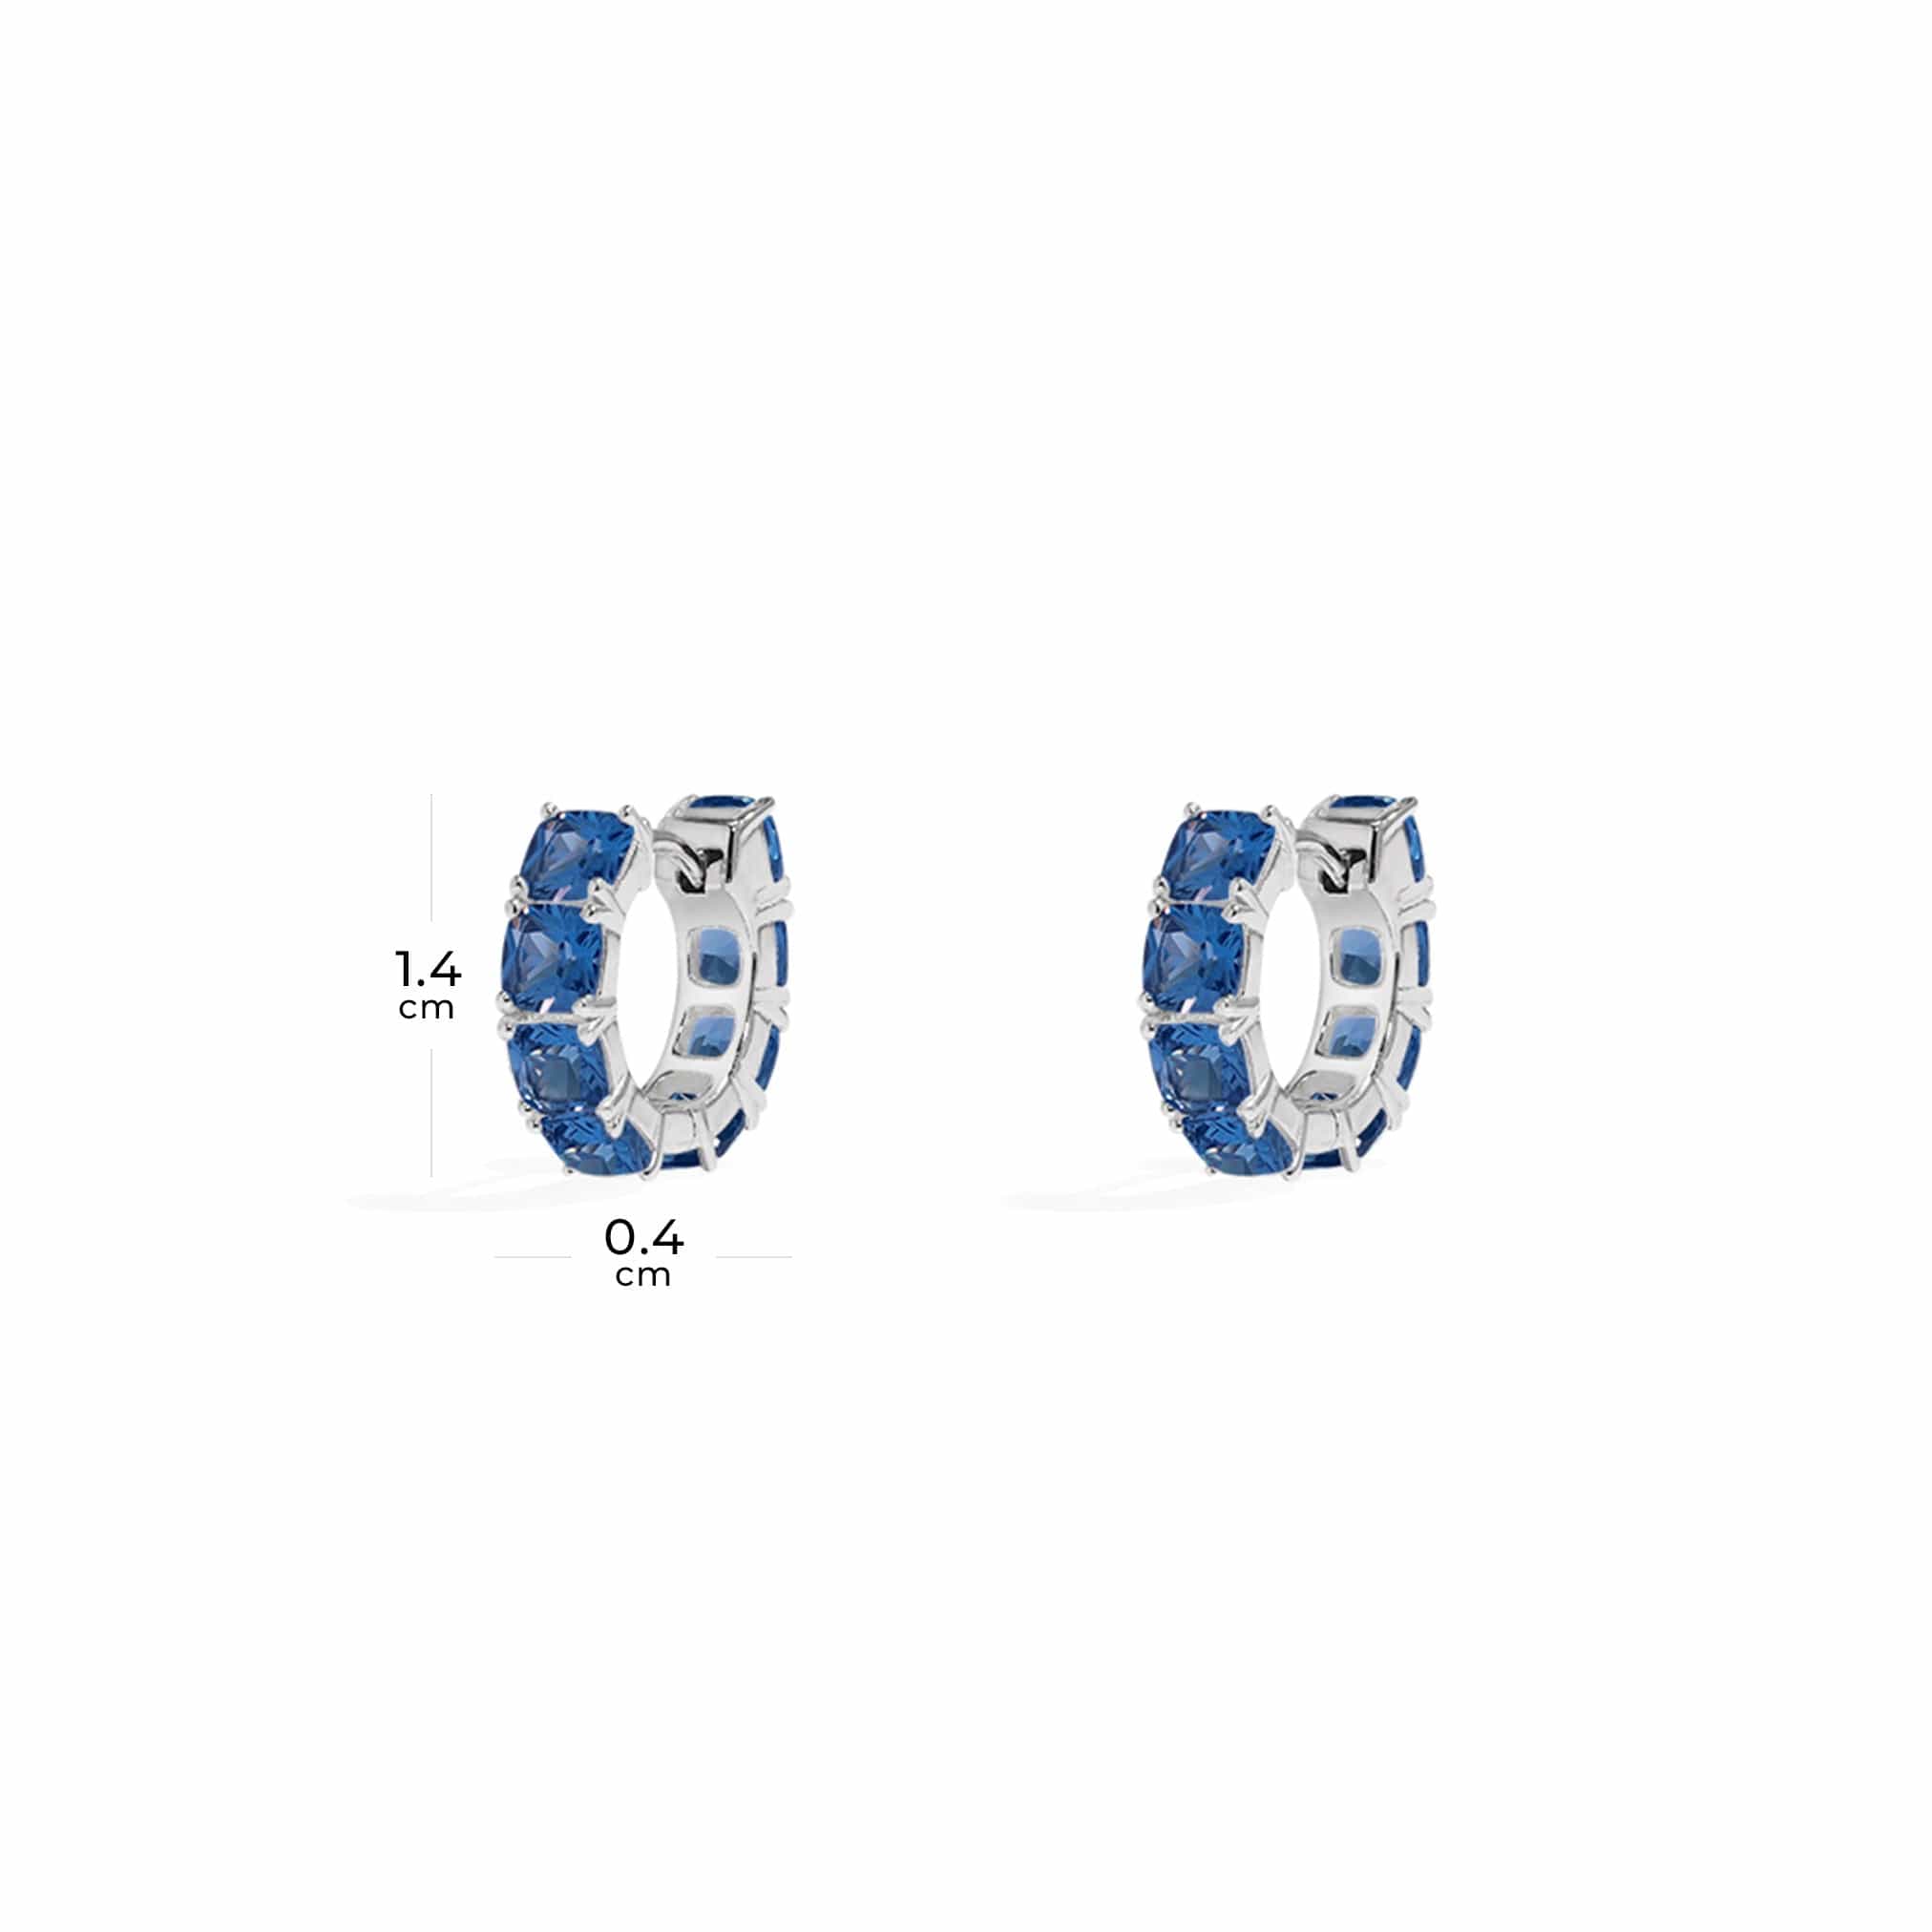 Blue Square Huggie Earrings - APM Monaco